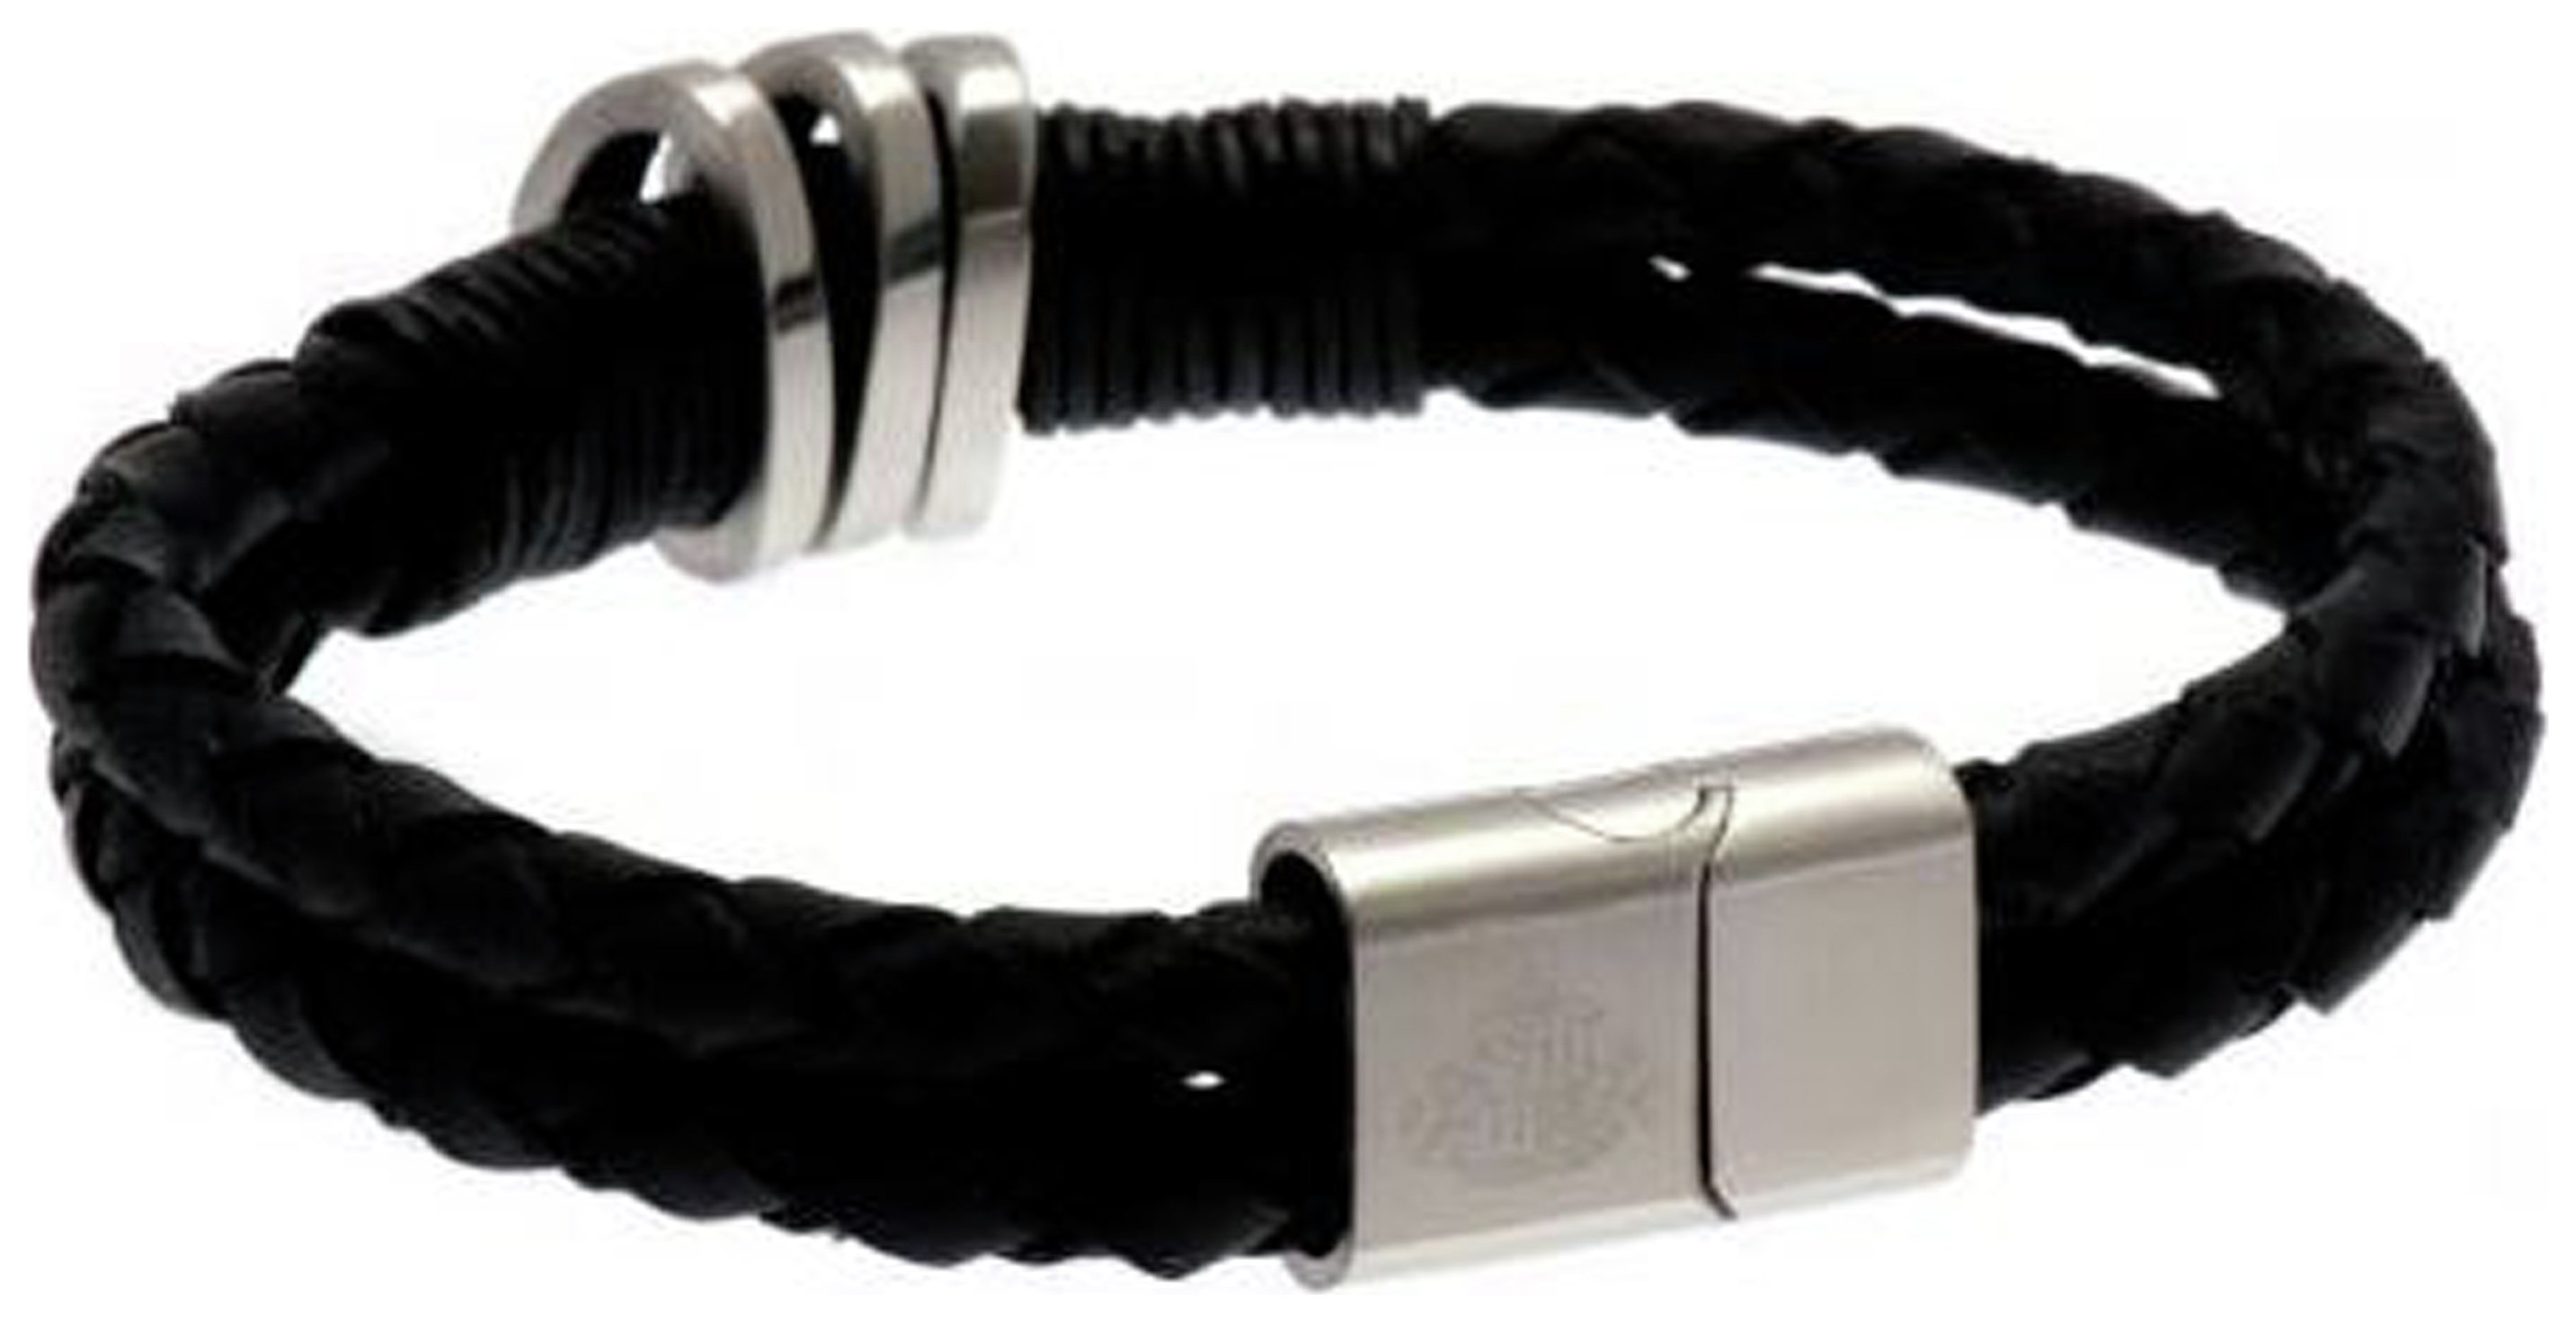 Stainless Steel and Leather Sunderland Bracelet